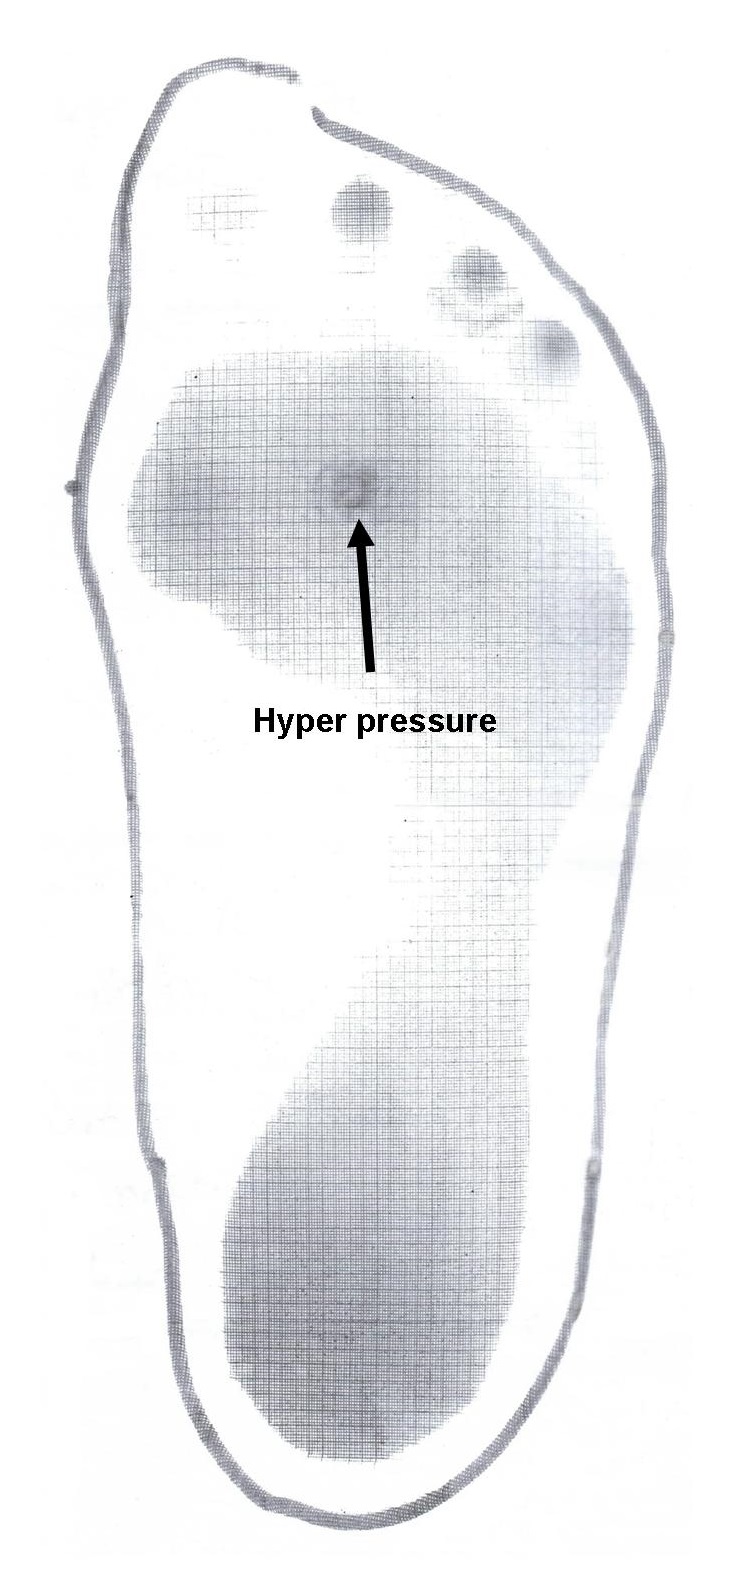 Plantar footprint with hyper pressure